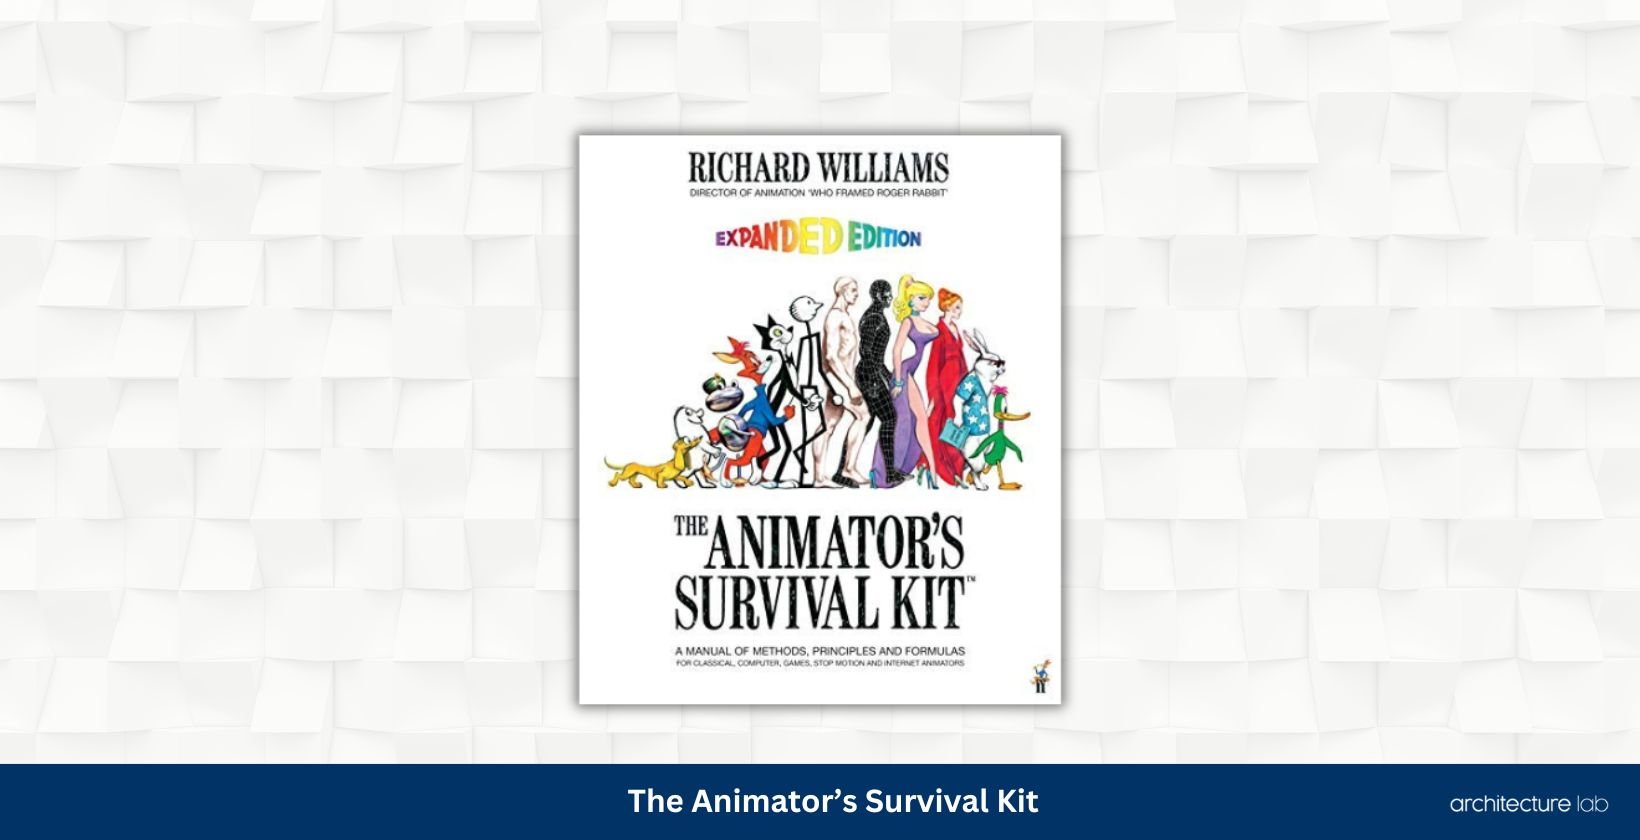 The animators survival kit